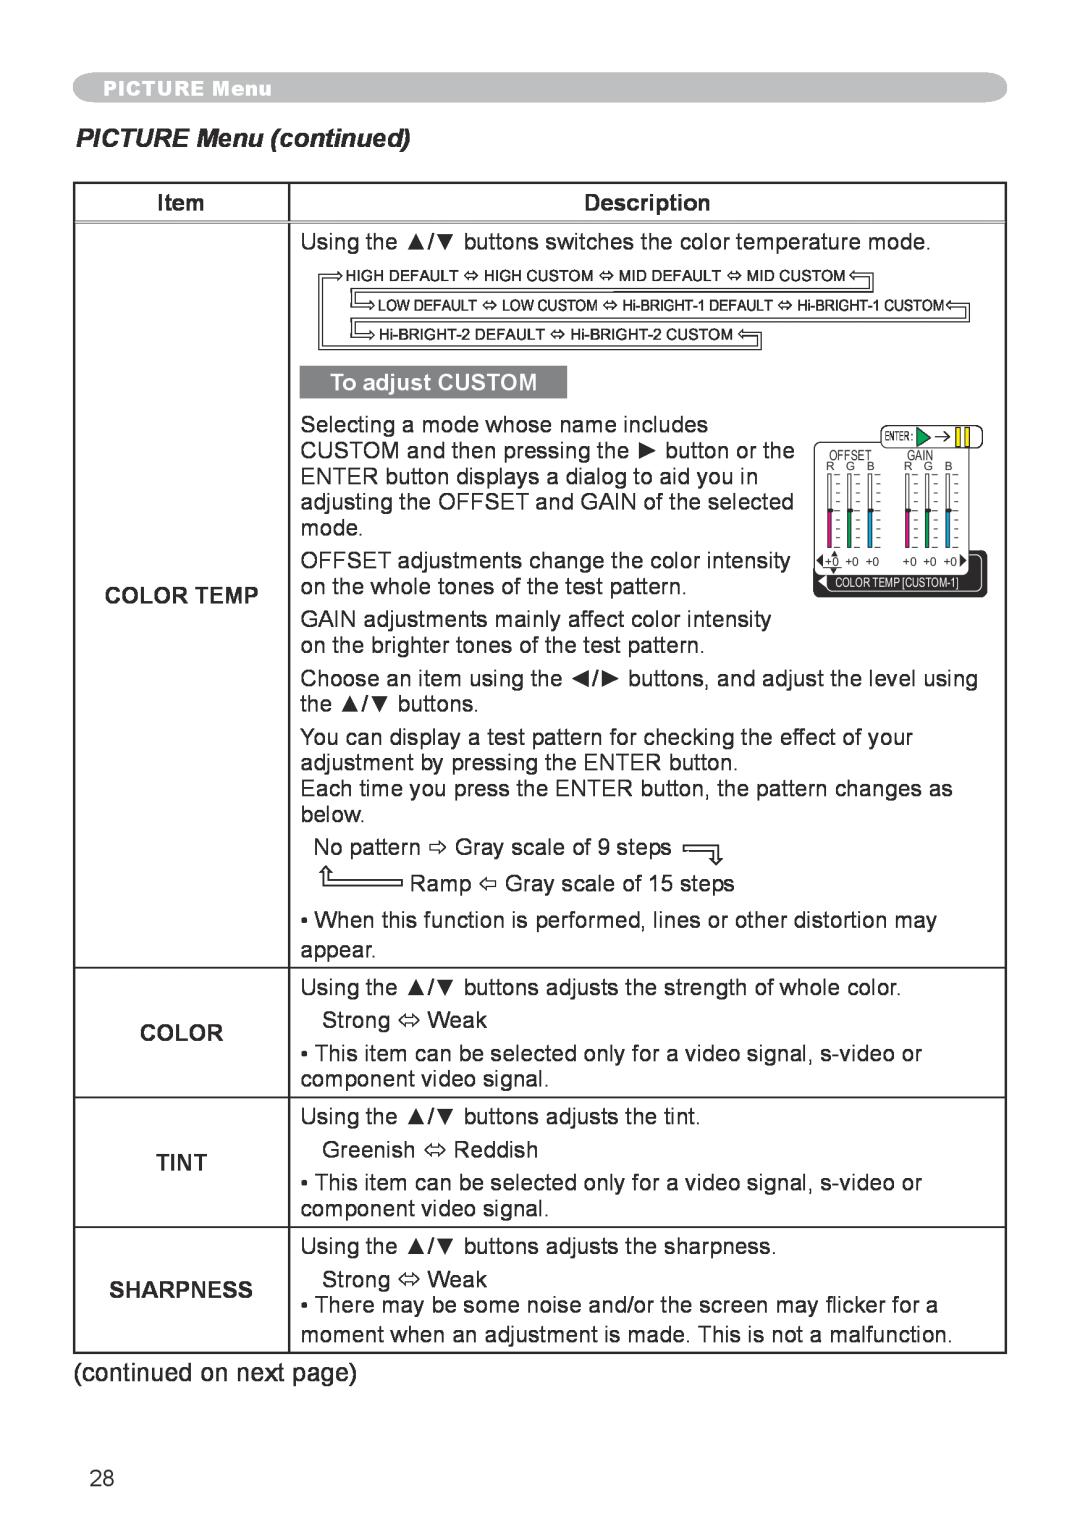 Hitachi CP-X608 user manual PICTURE Menu continued, Description, To adjust CUSTOM, Color Temp, Tint, Sharpness 